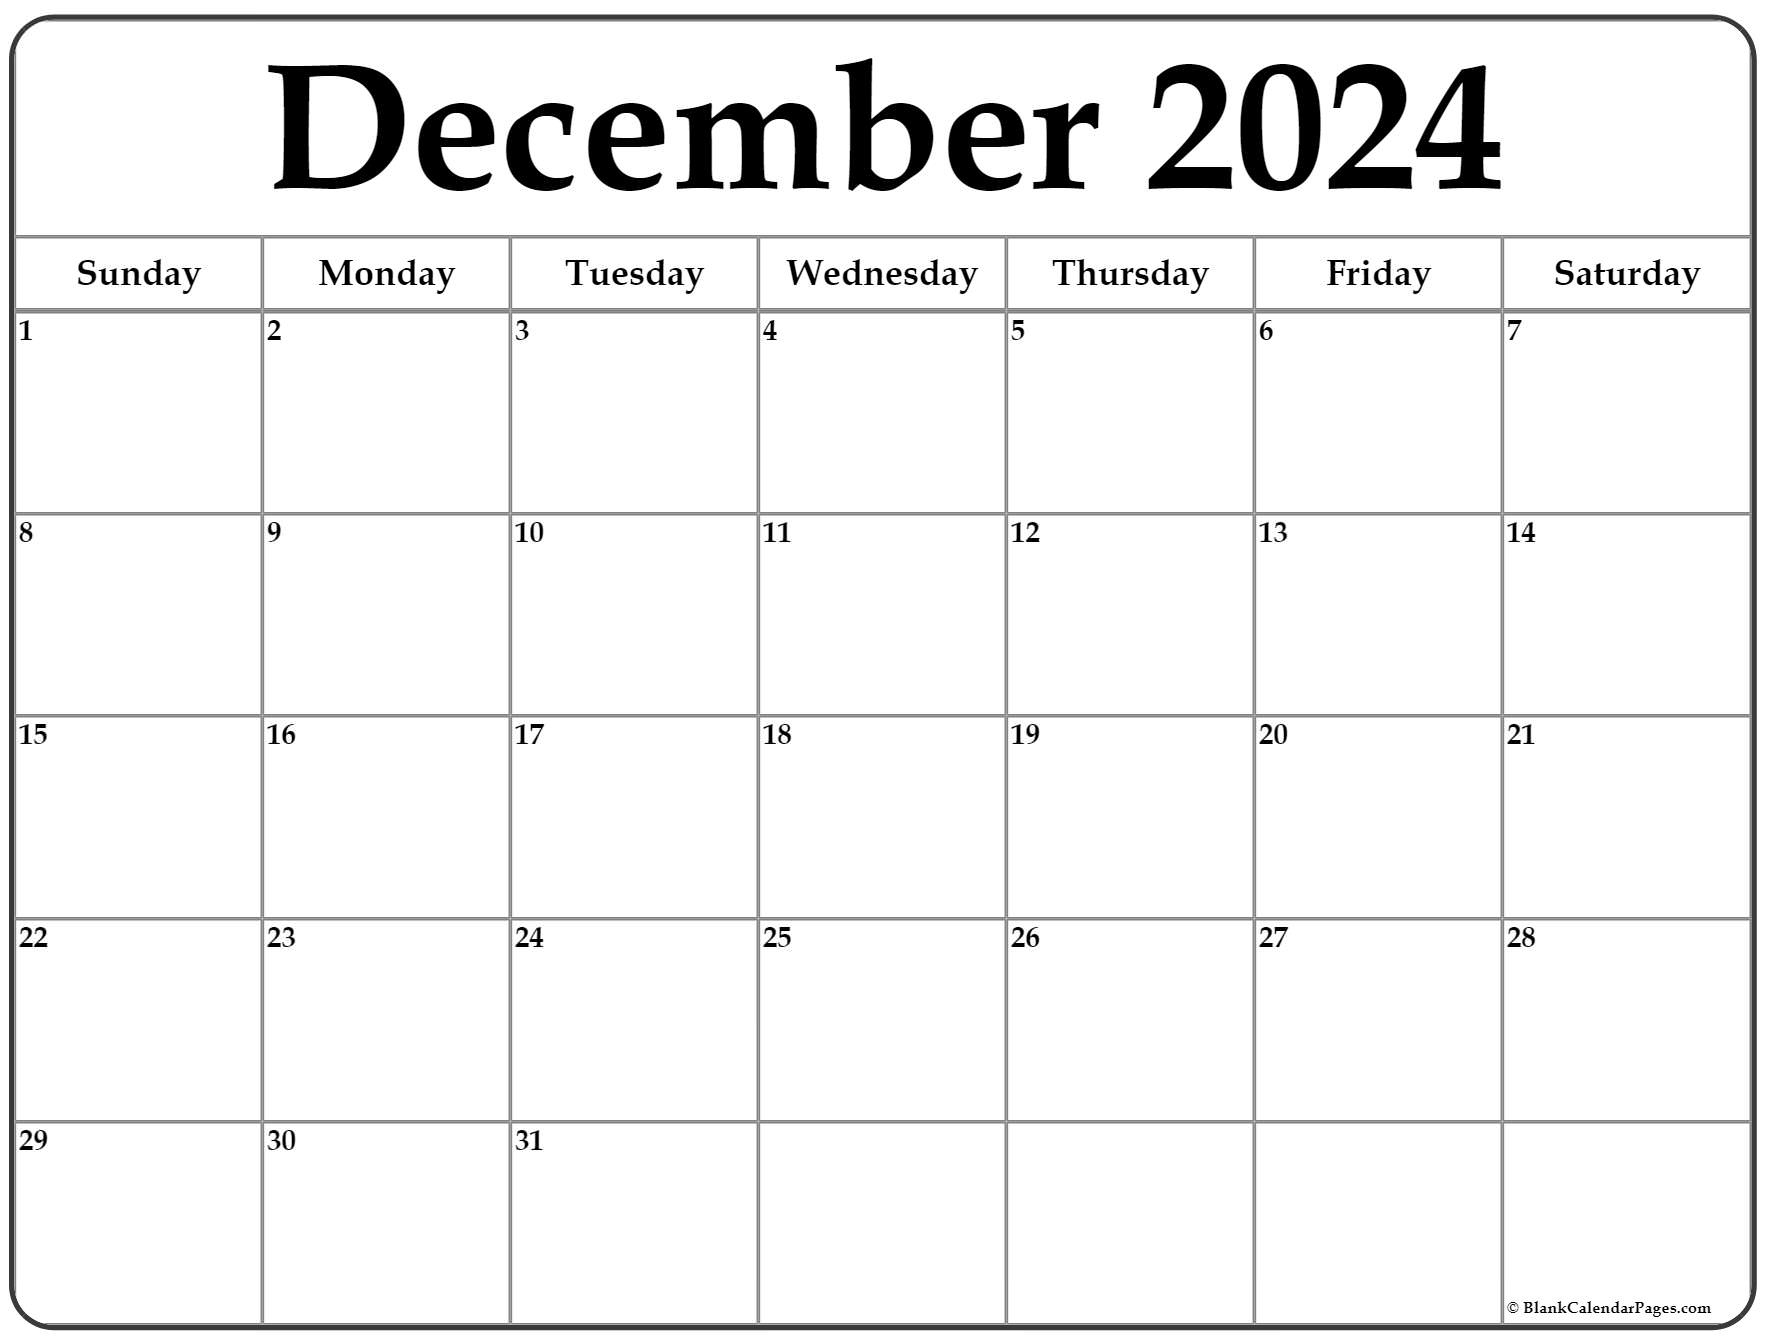 Dec 2024 Calendar Template Free Chere Deeanne - Free Printable A4 Calendar December 2024